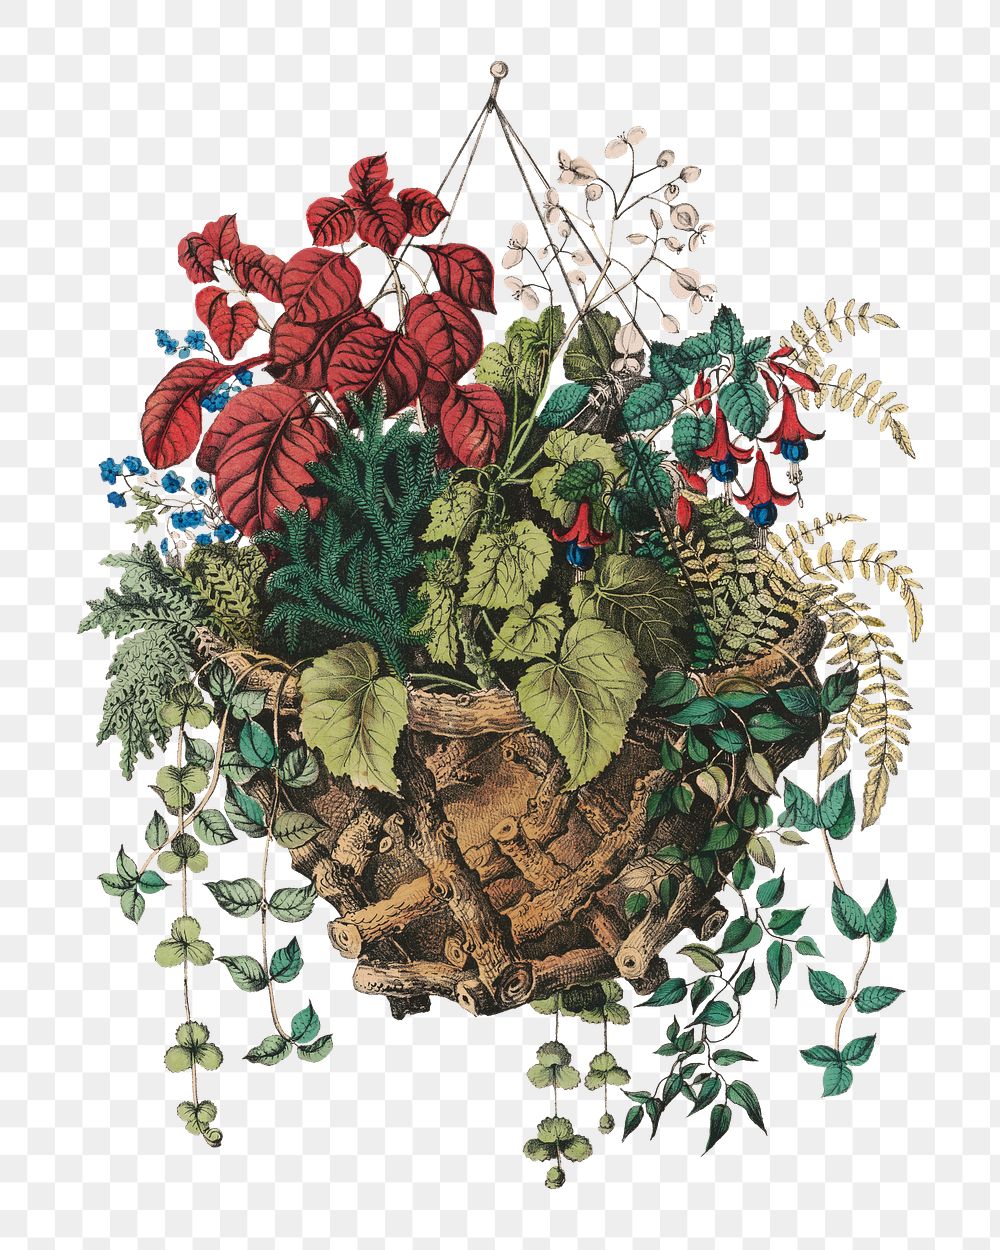 PNG Rustic basket, vintage botanical illustration by Currier & Ives, transparent background. Remixed by rawpixel.